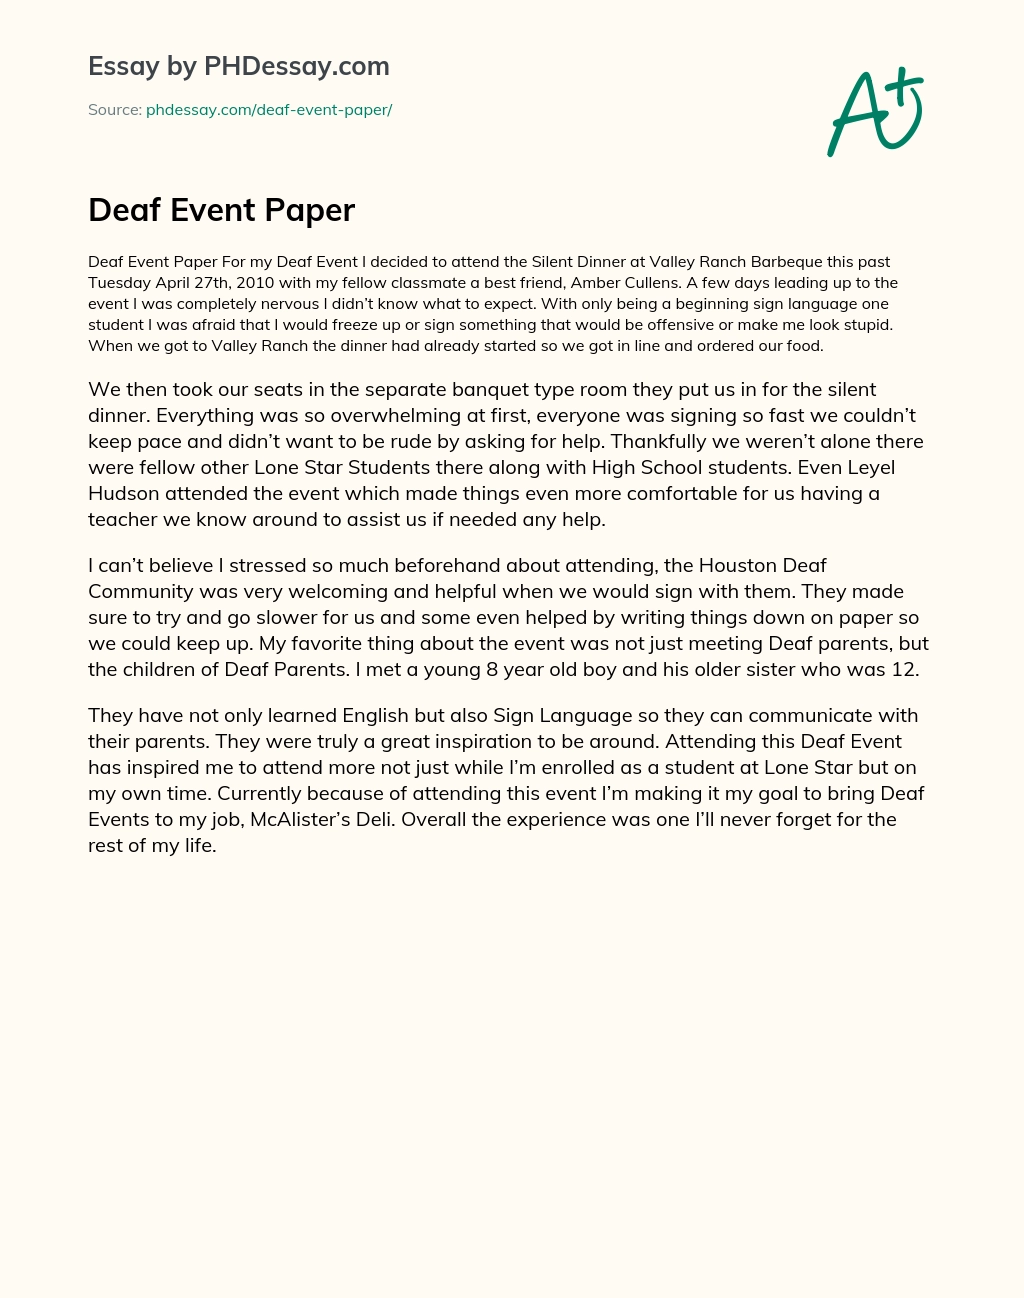 Deaf Event Paper essay